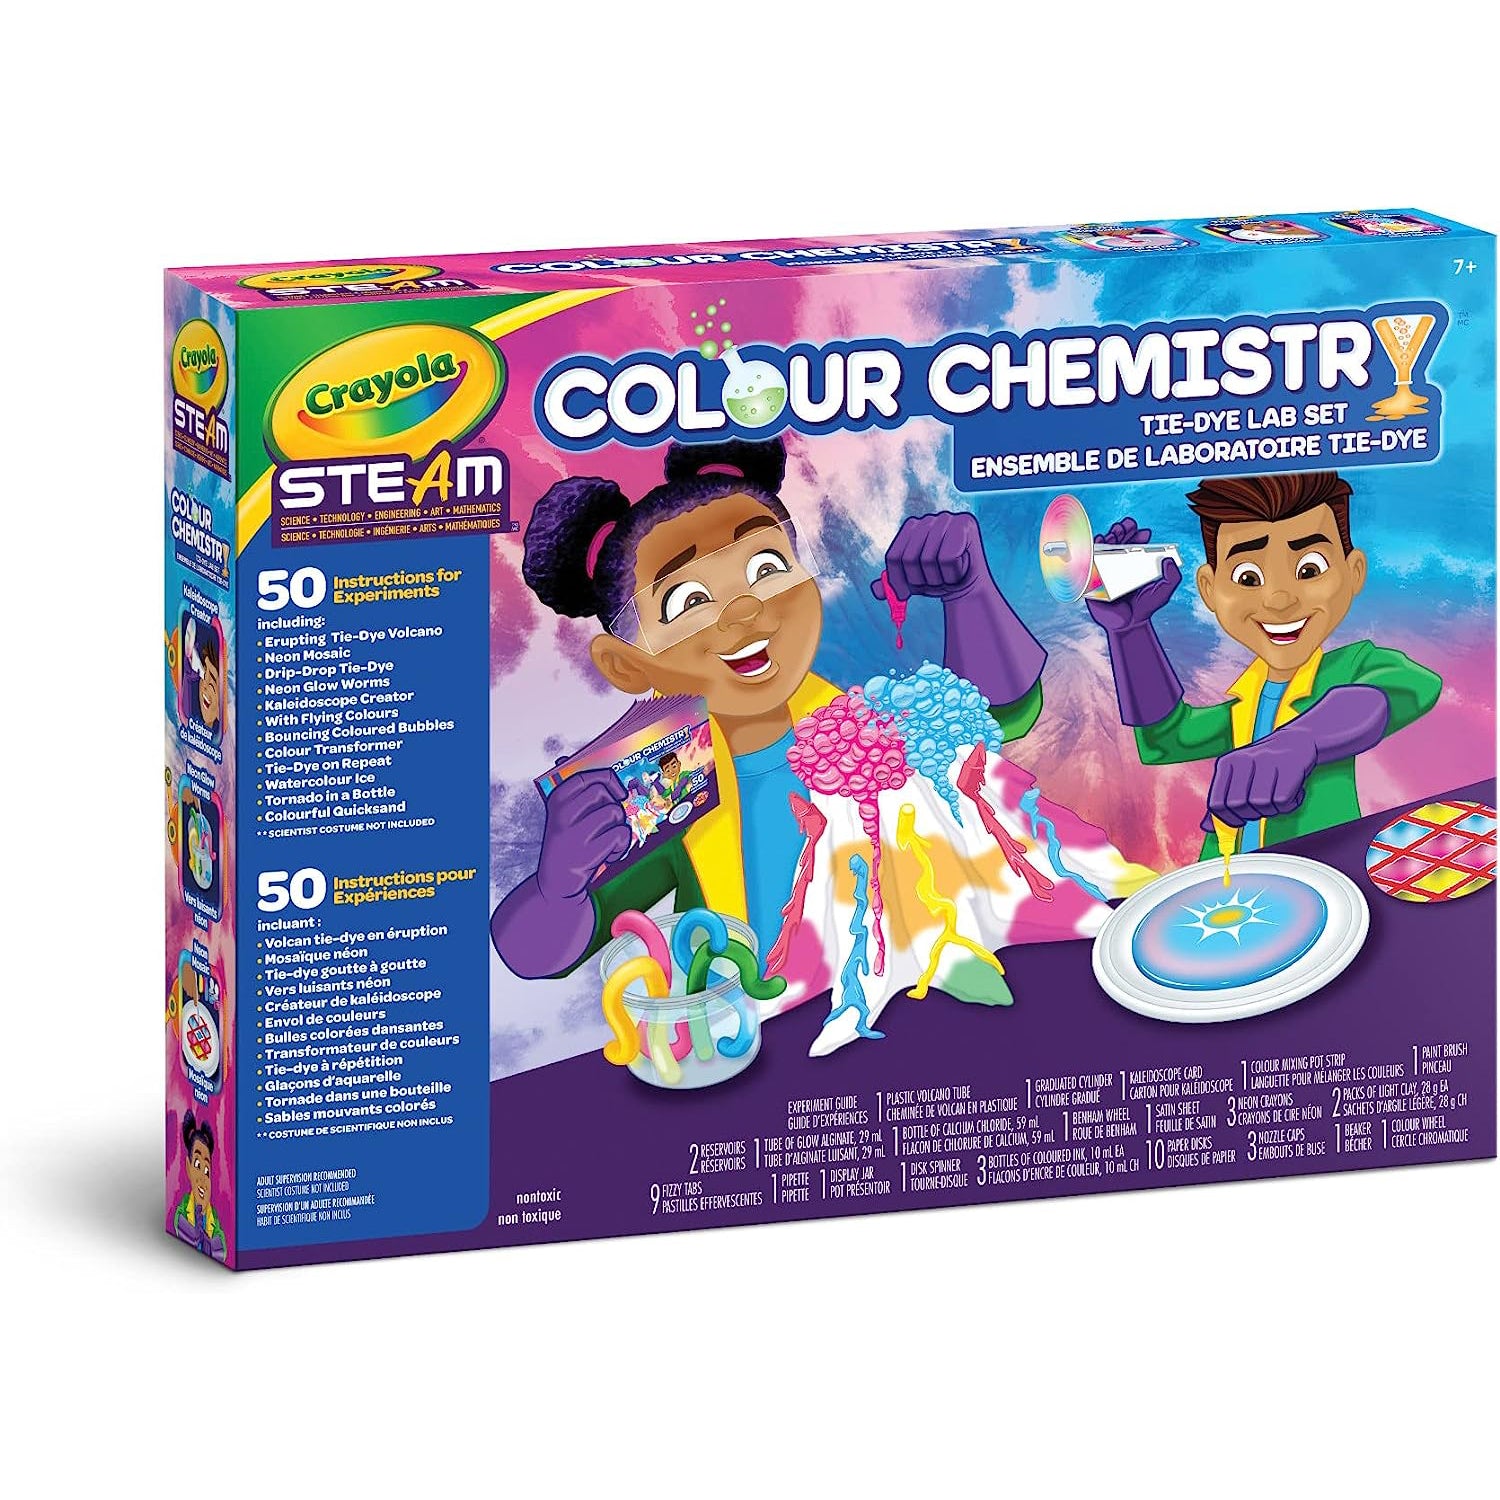 Crayola Tie Dye Colour Chemistry